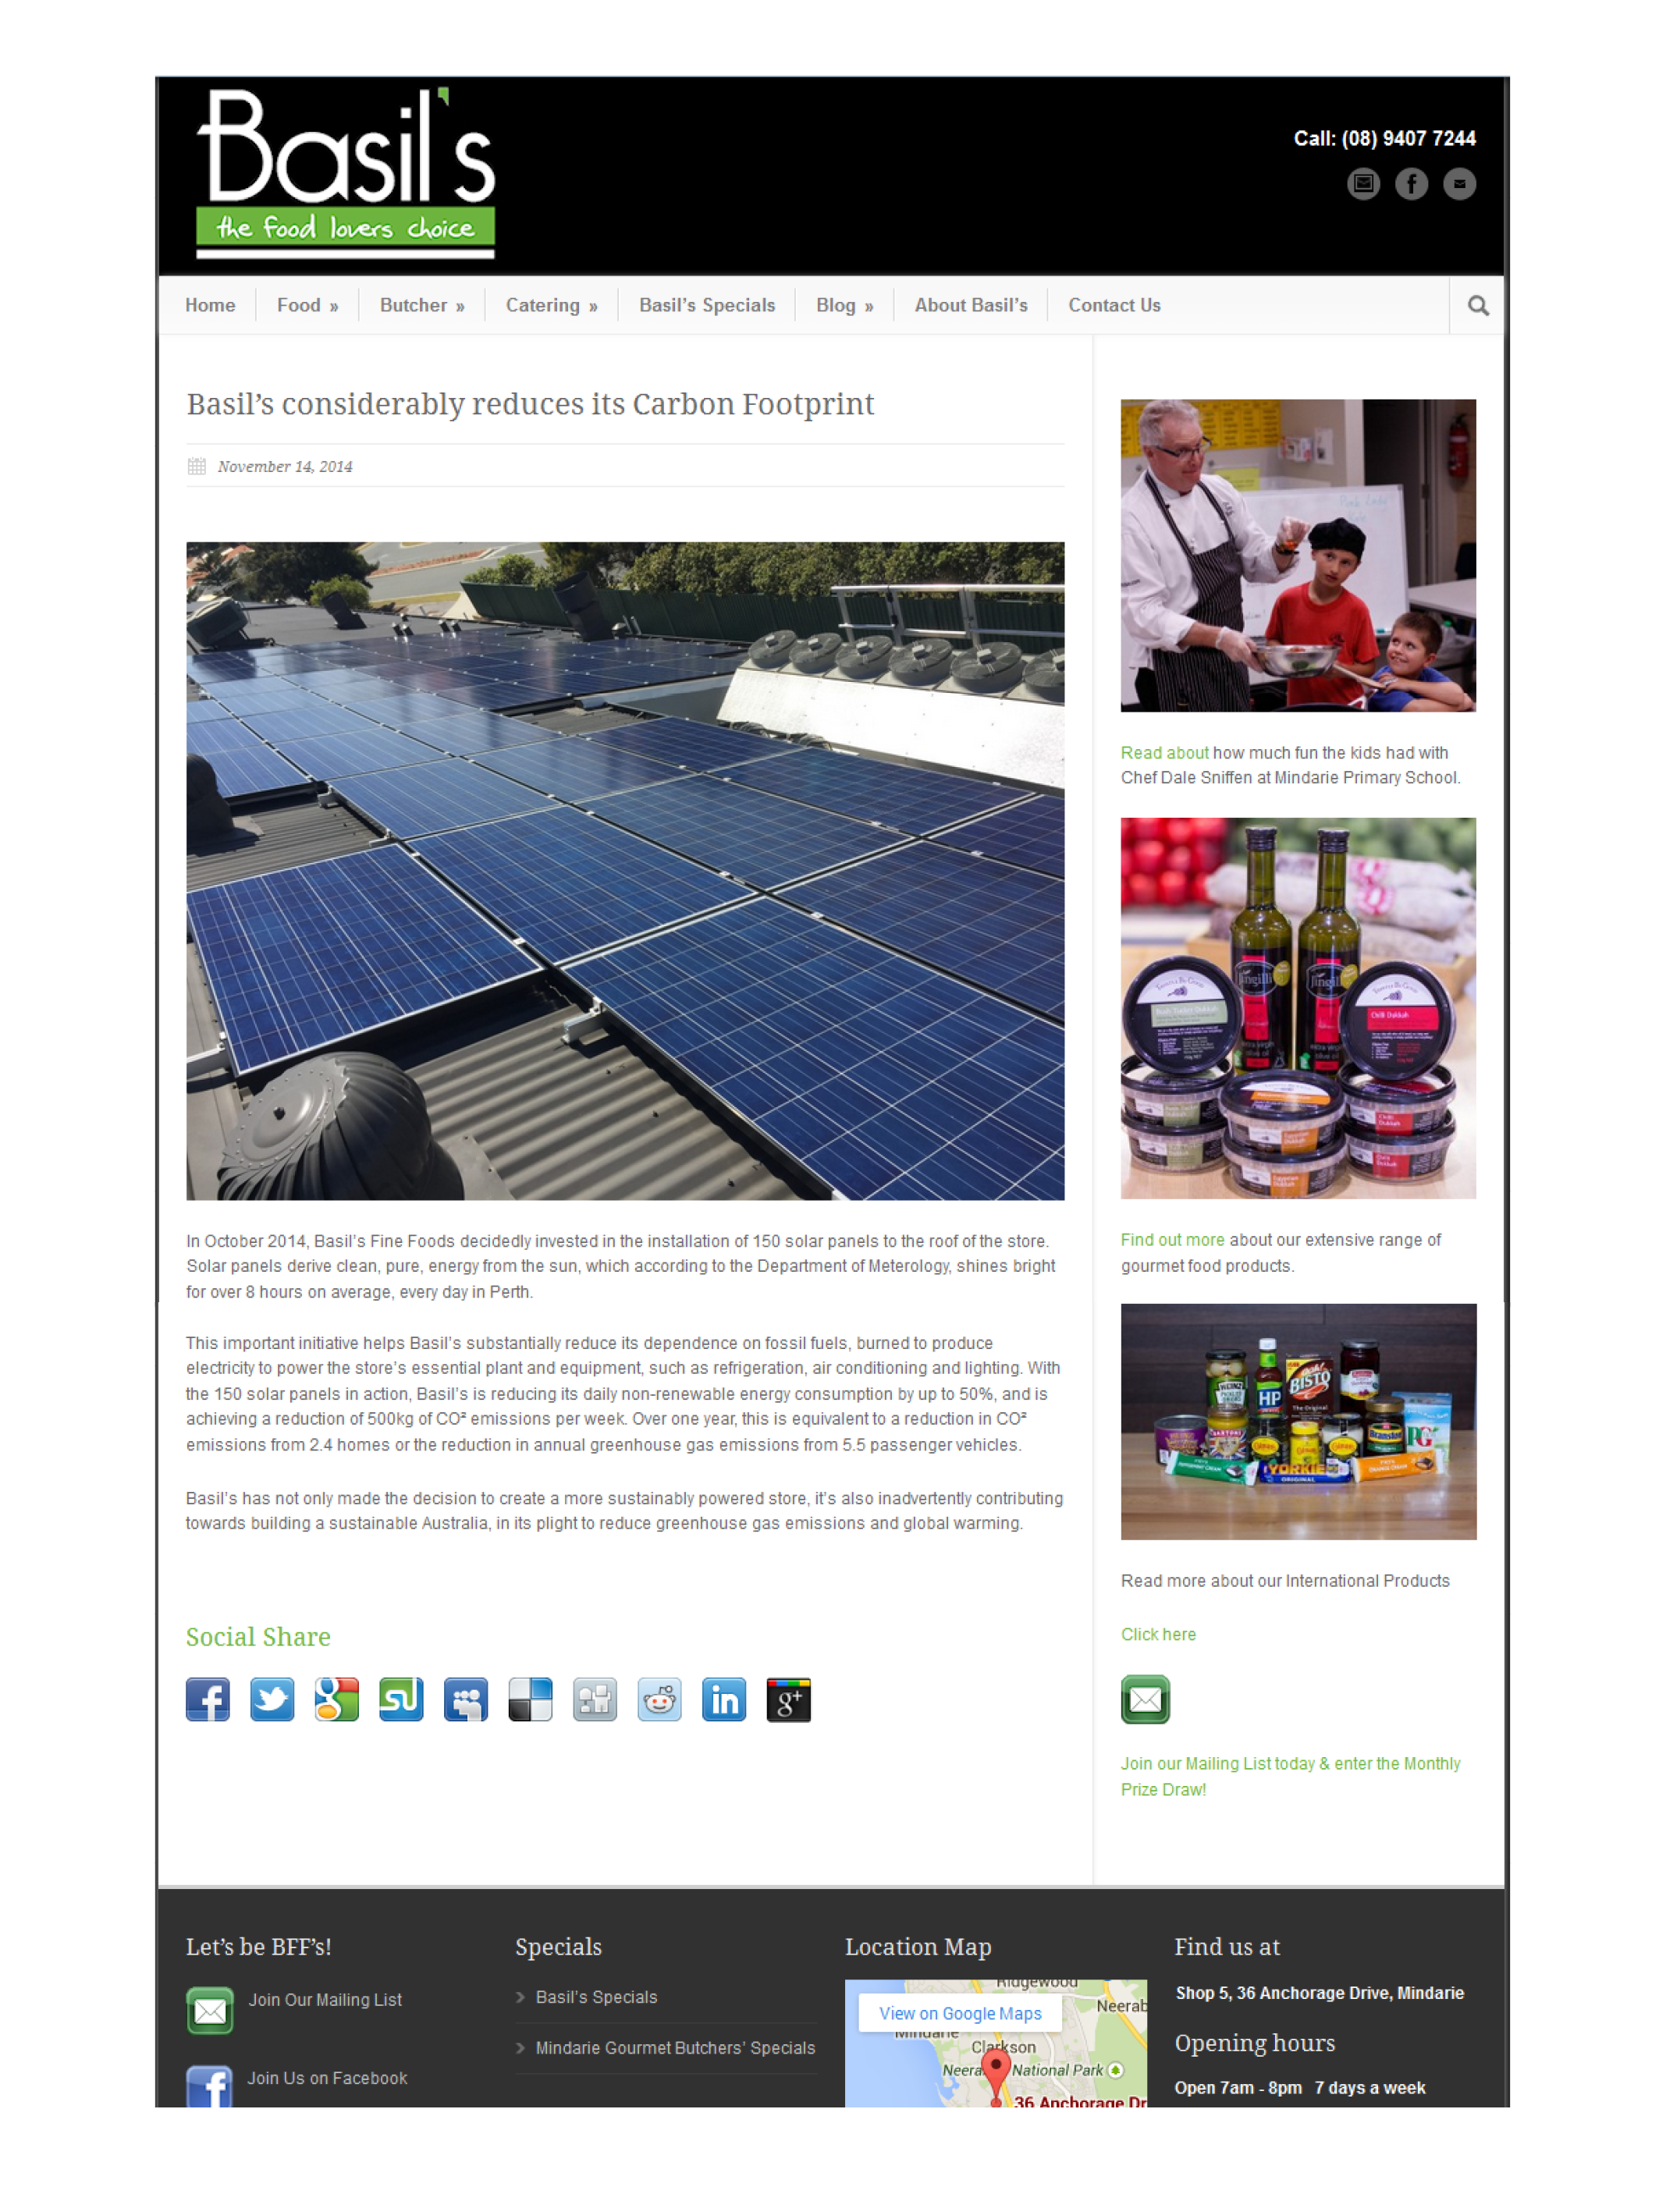 Marketing Wing blog for Basil's carbon footprint